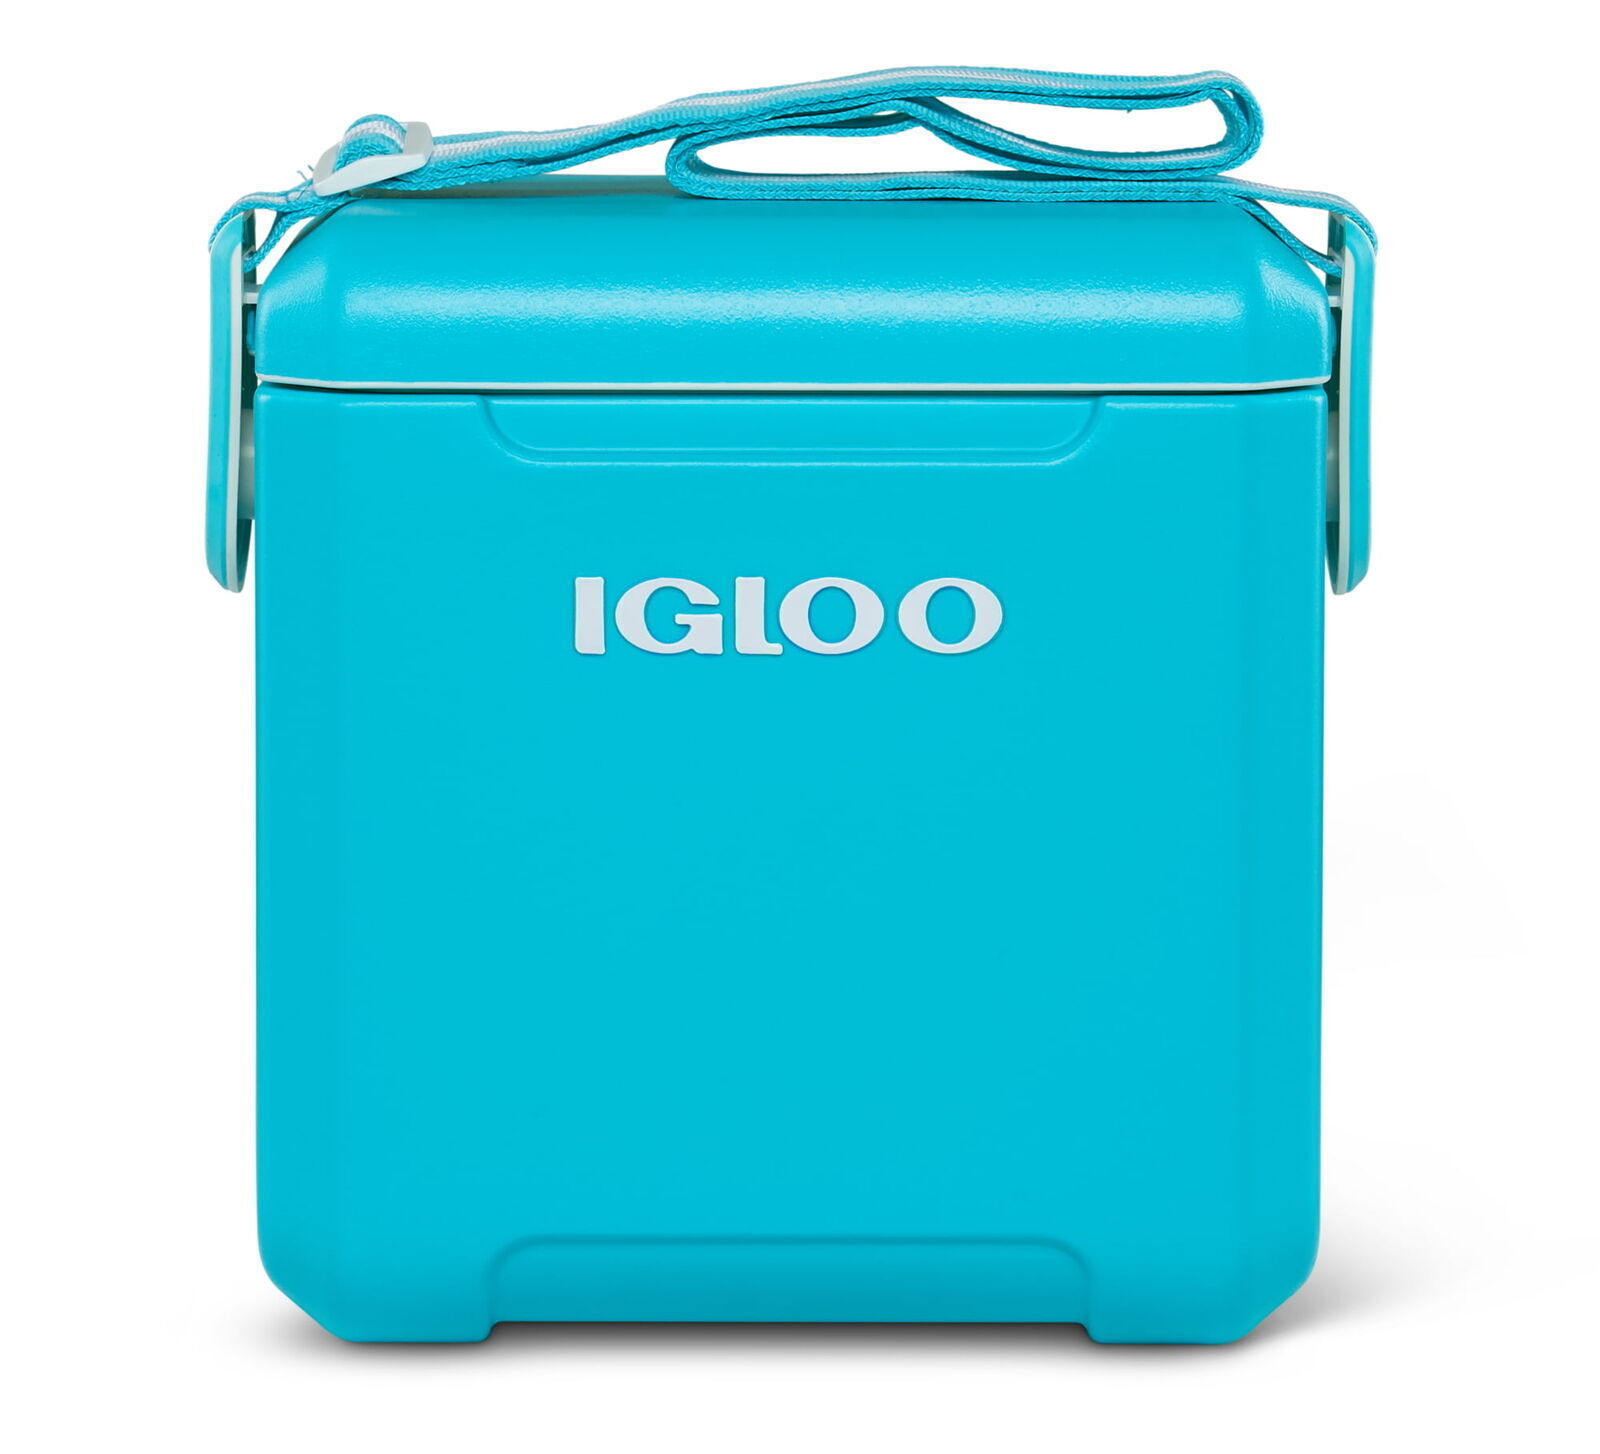 Igloo 11 Qt Tag-a-Long Hard Sided Cooler, Turquoise Blue.